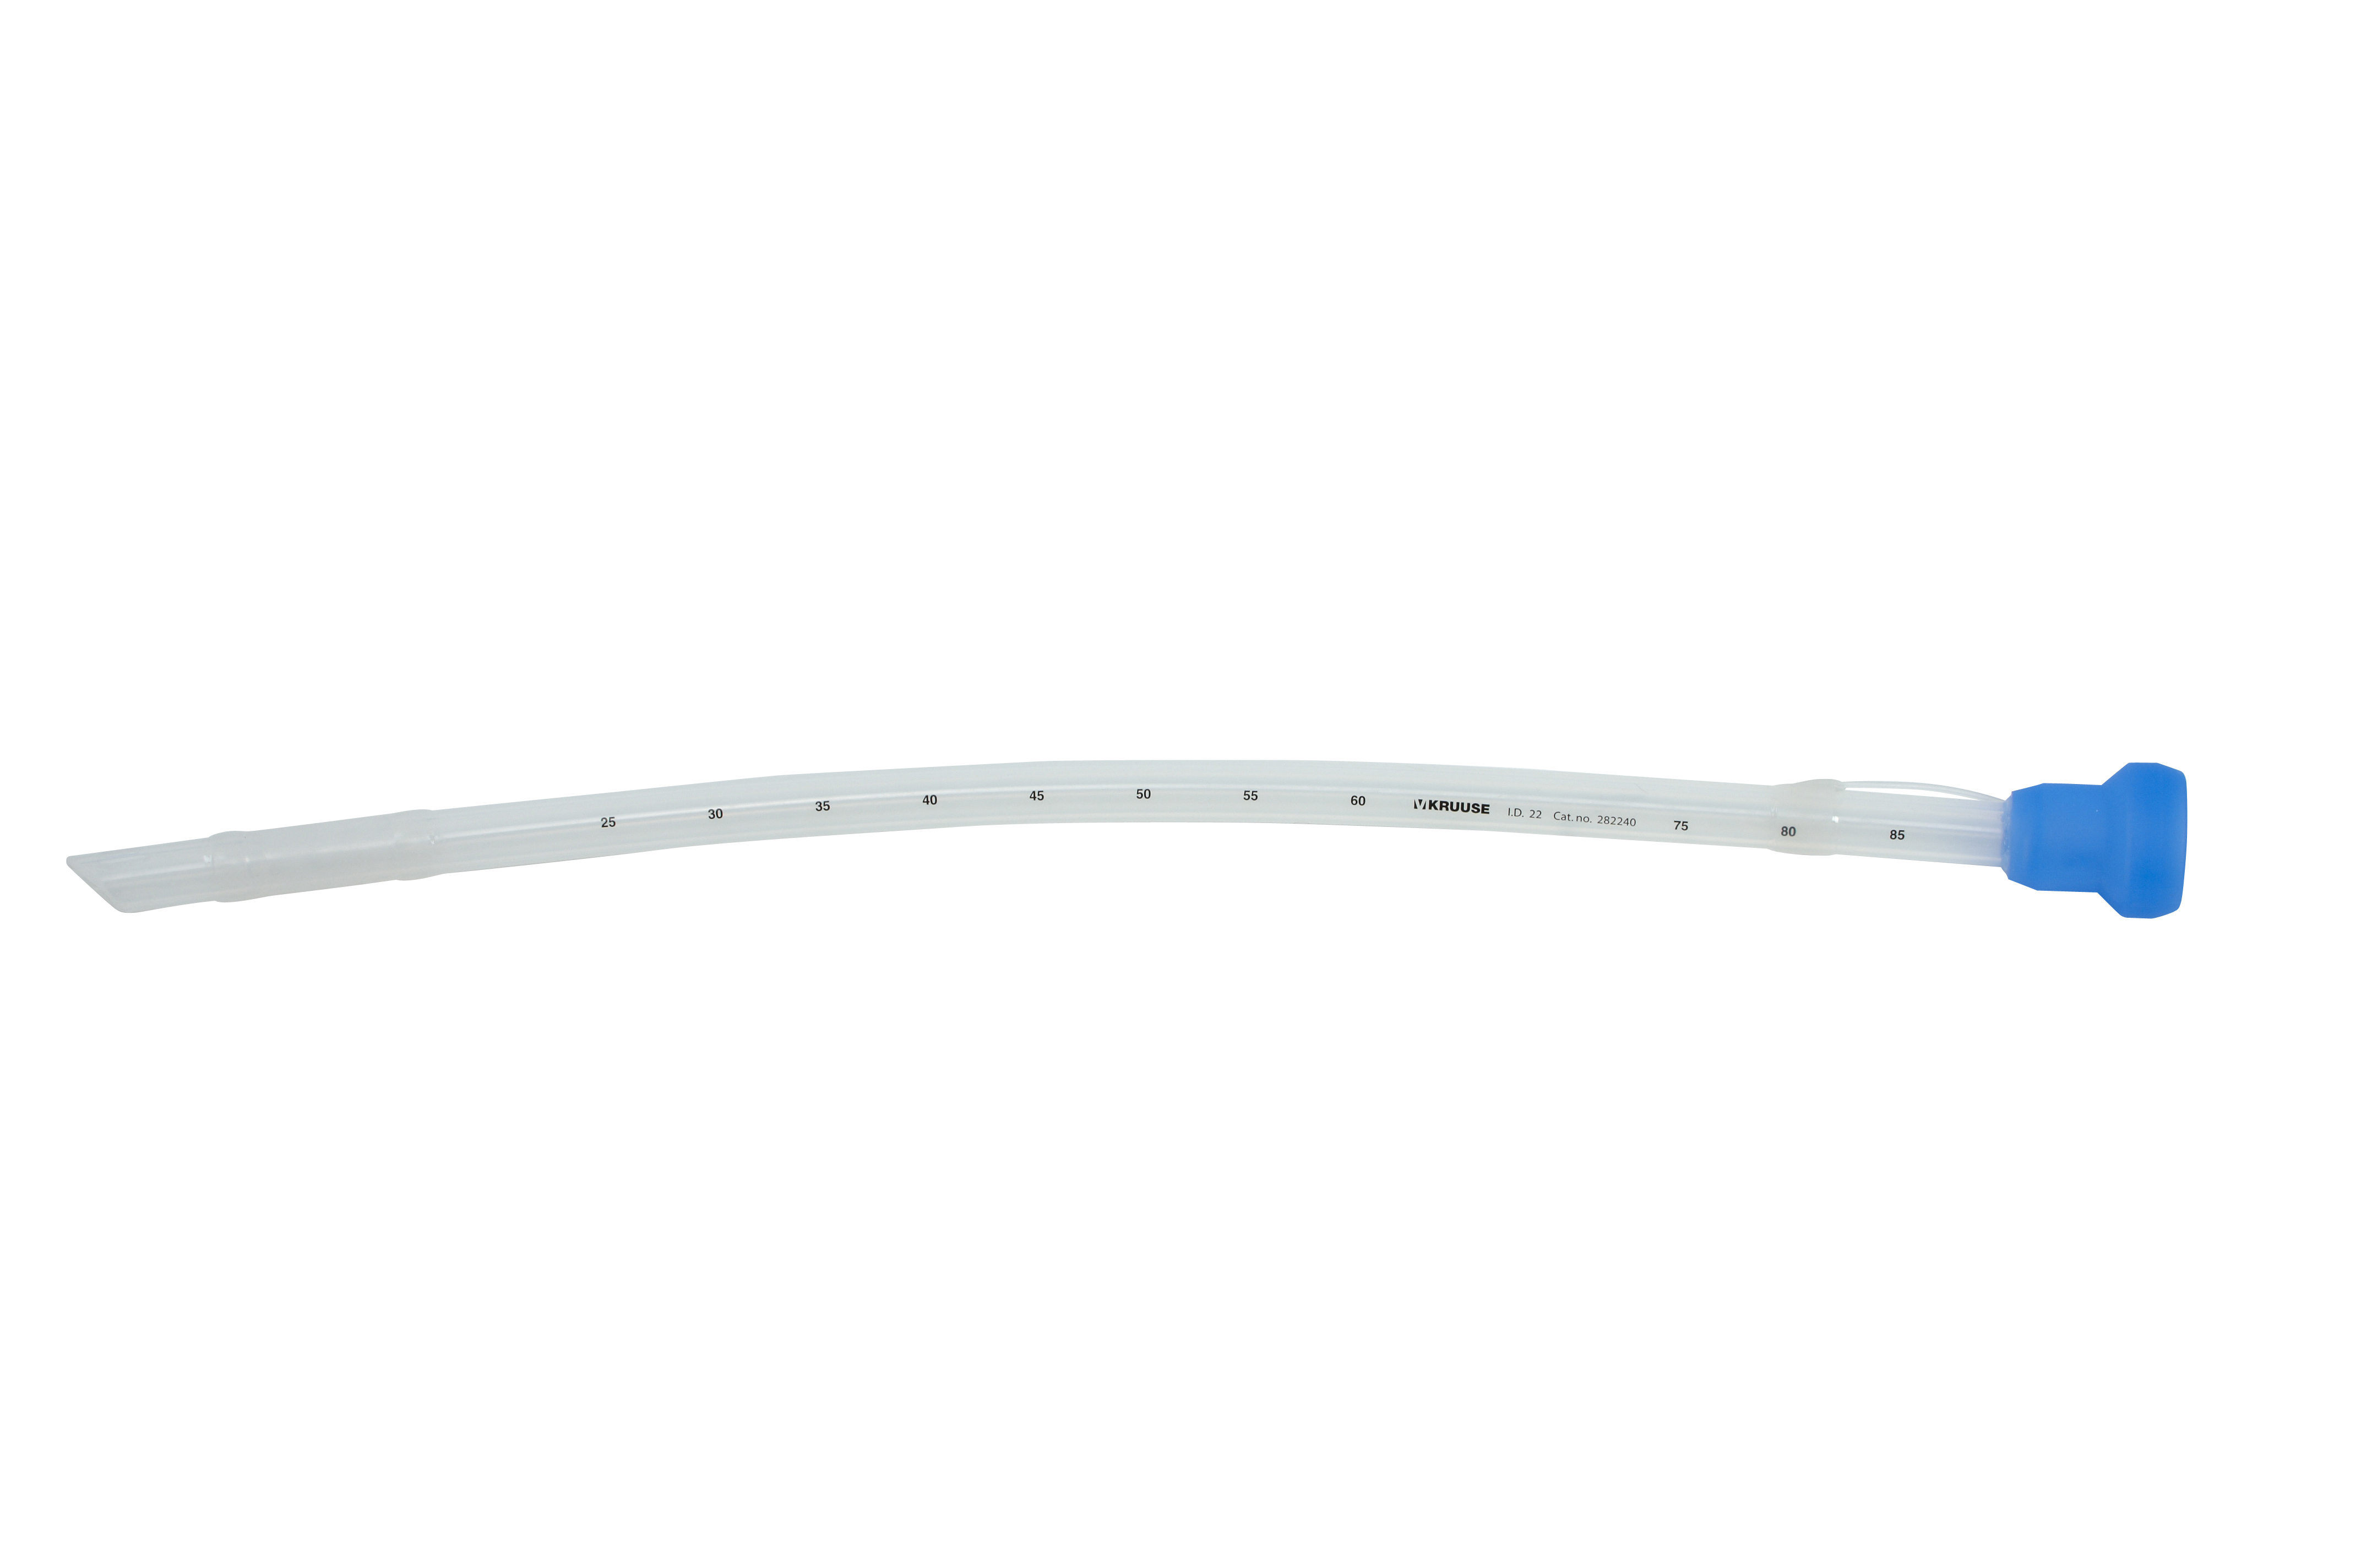 KRUUSE Endotracheal Catheter, silicone, w/cuff, L connector, ID 18.0 mm, OD 24.0 mm, 72 Fr x 75 cm (29.5'')